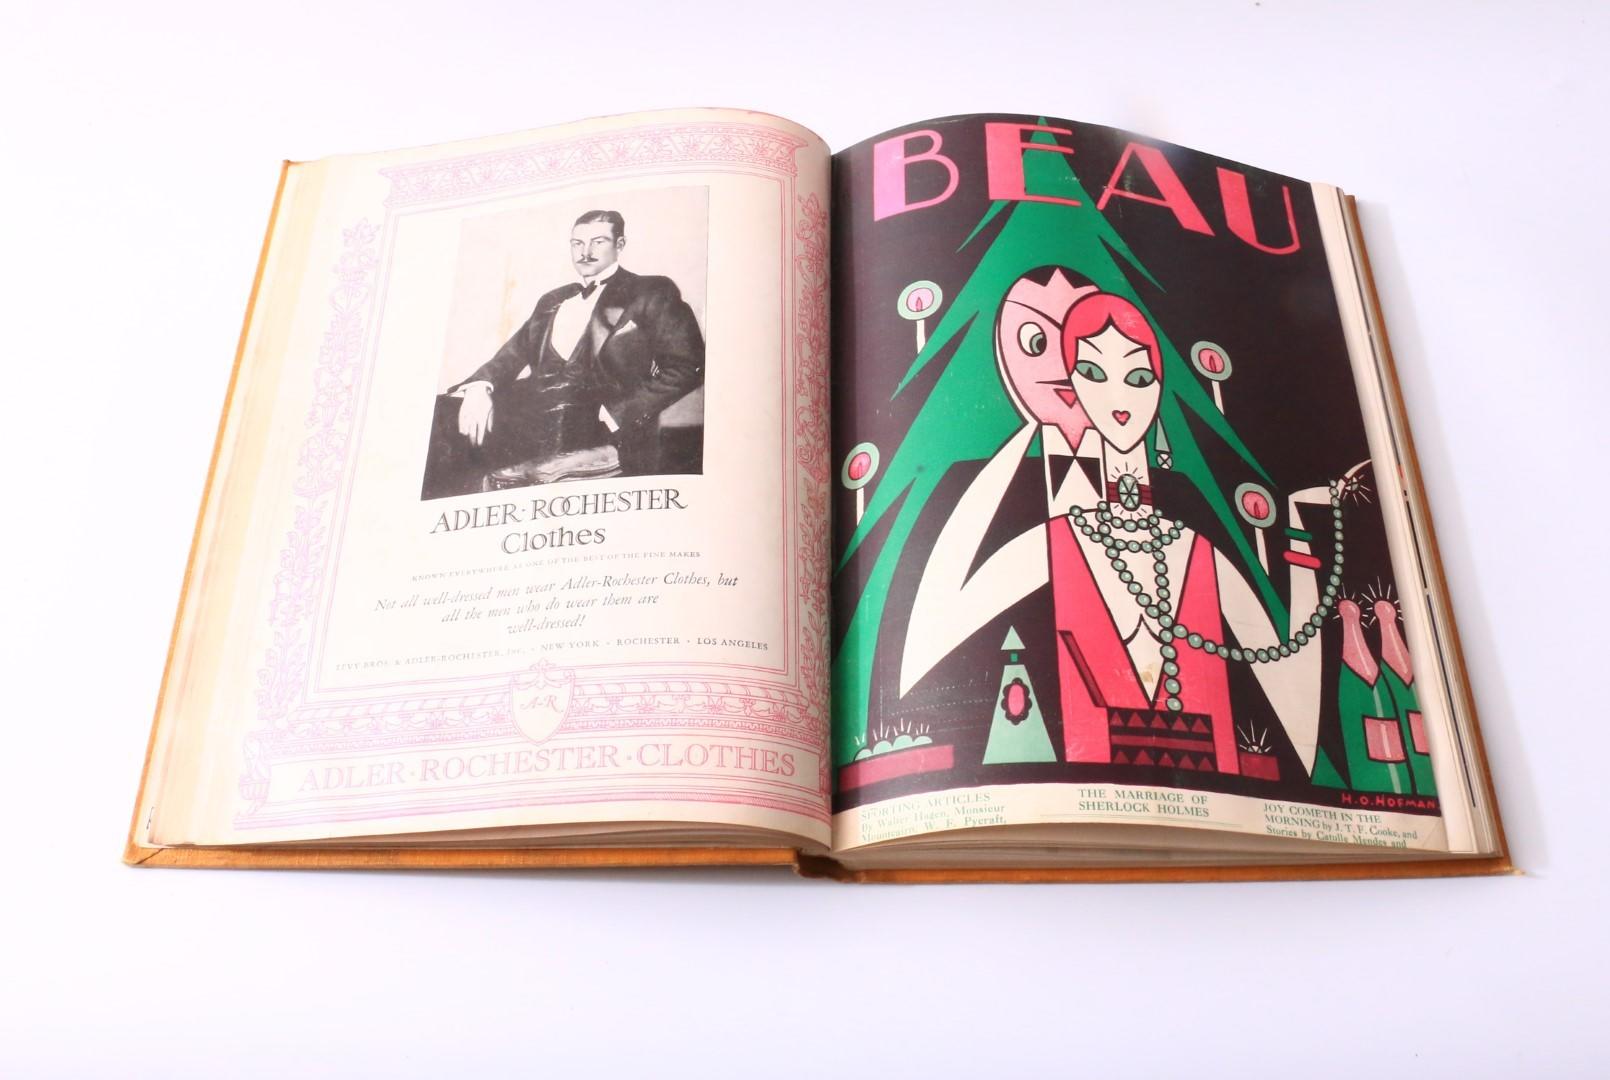 Samuel Roth [ed.] [with] Lord Dunsany, - Beau Magazine - Beau Publishing, 1926-1927, First Edition.